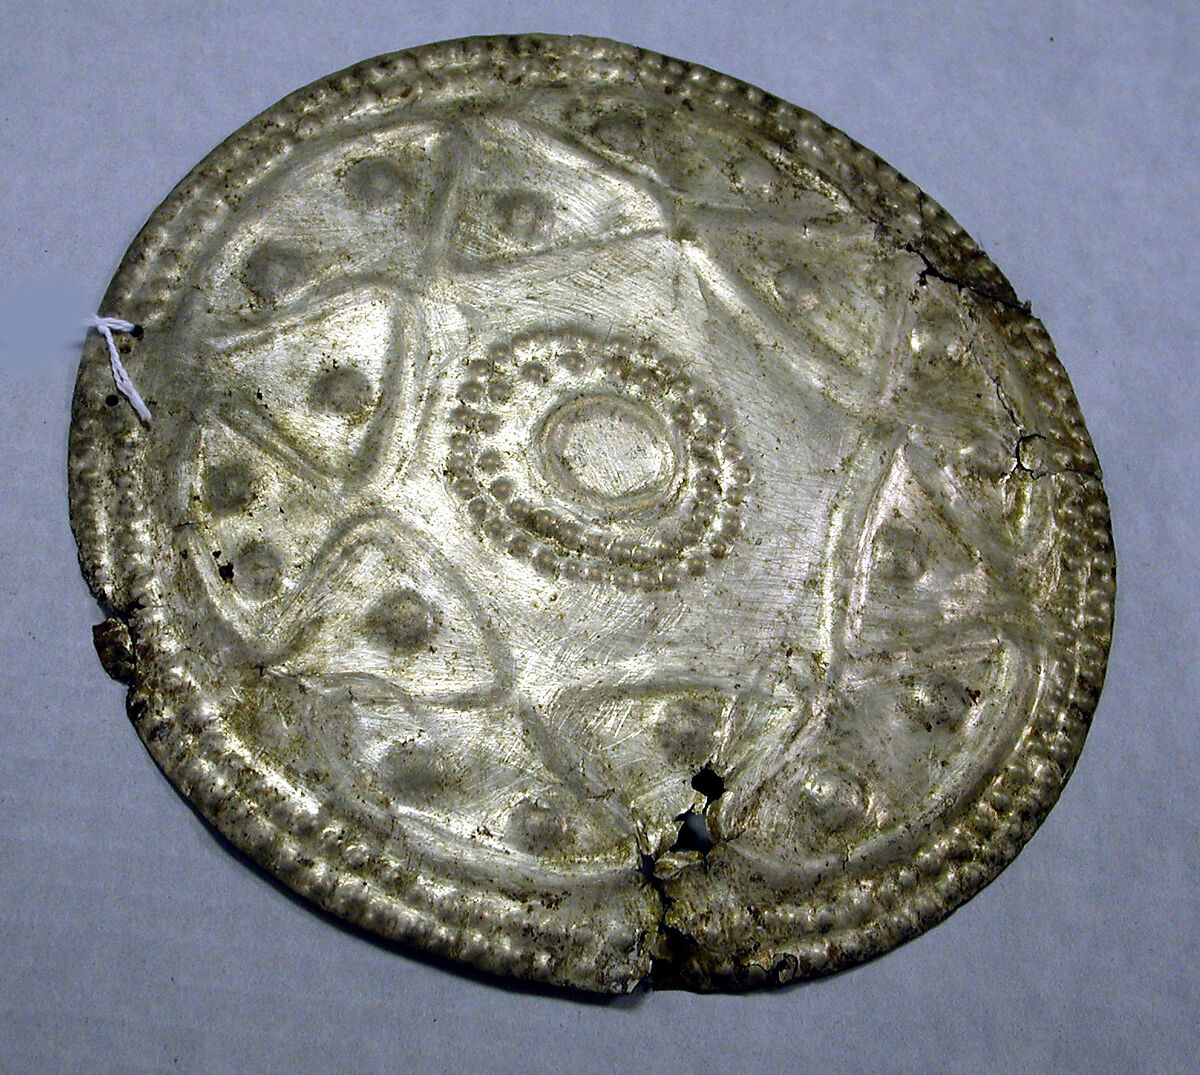 Silver Disk Ornament, Silver (hammered), Ecuador 